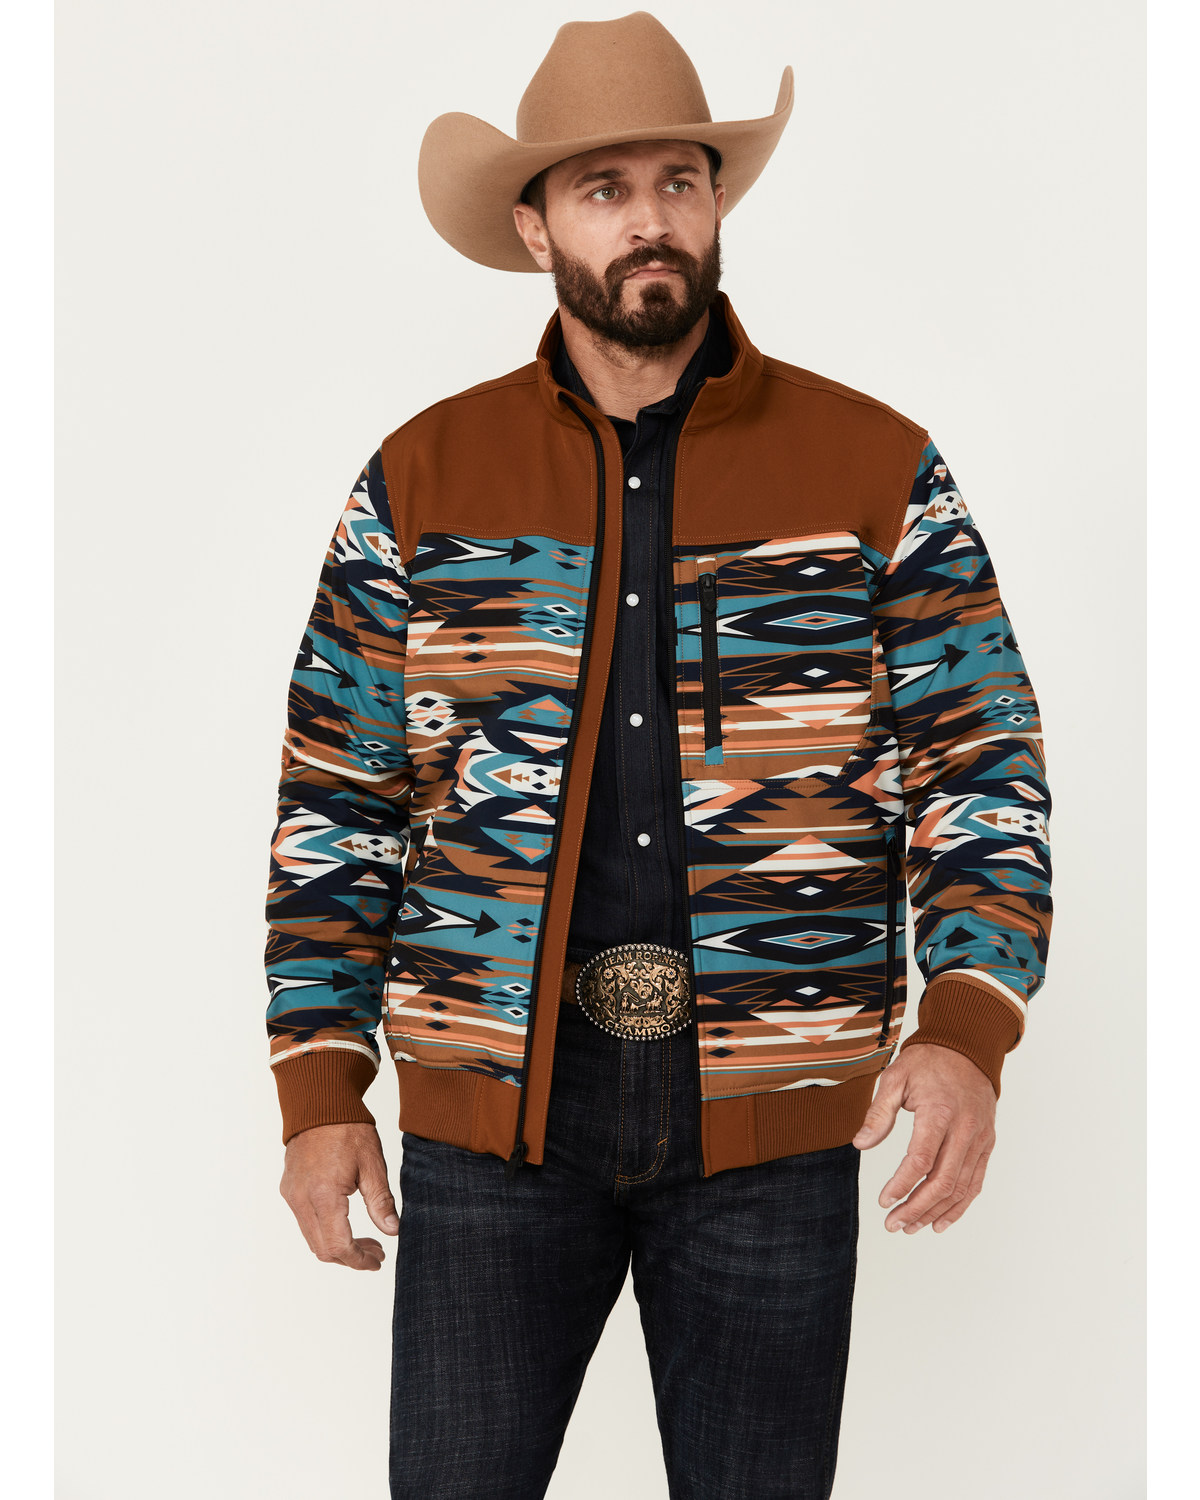 RANK 45® Men's Southwestern Print Bomber Softshell Jacket